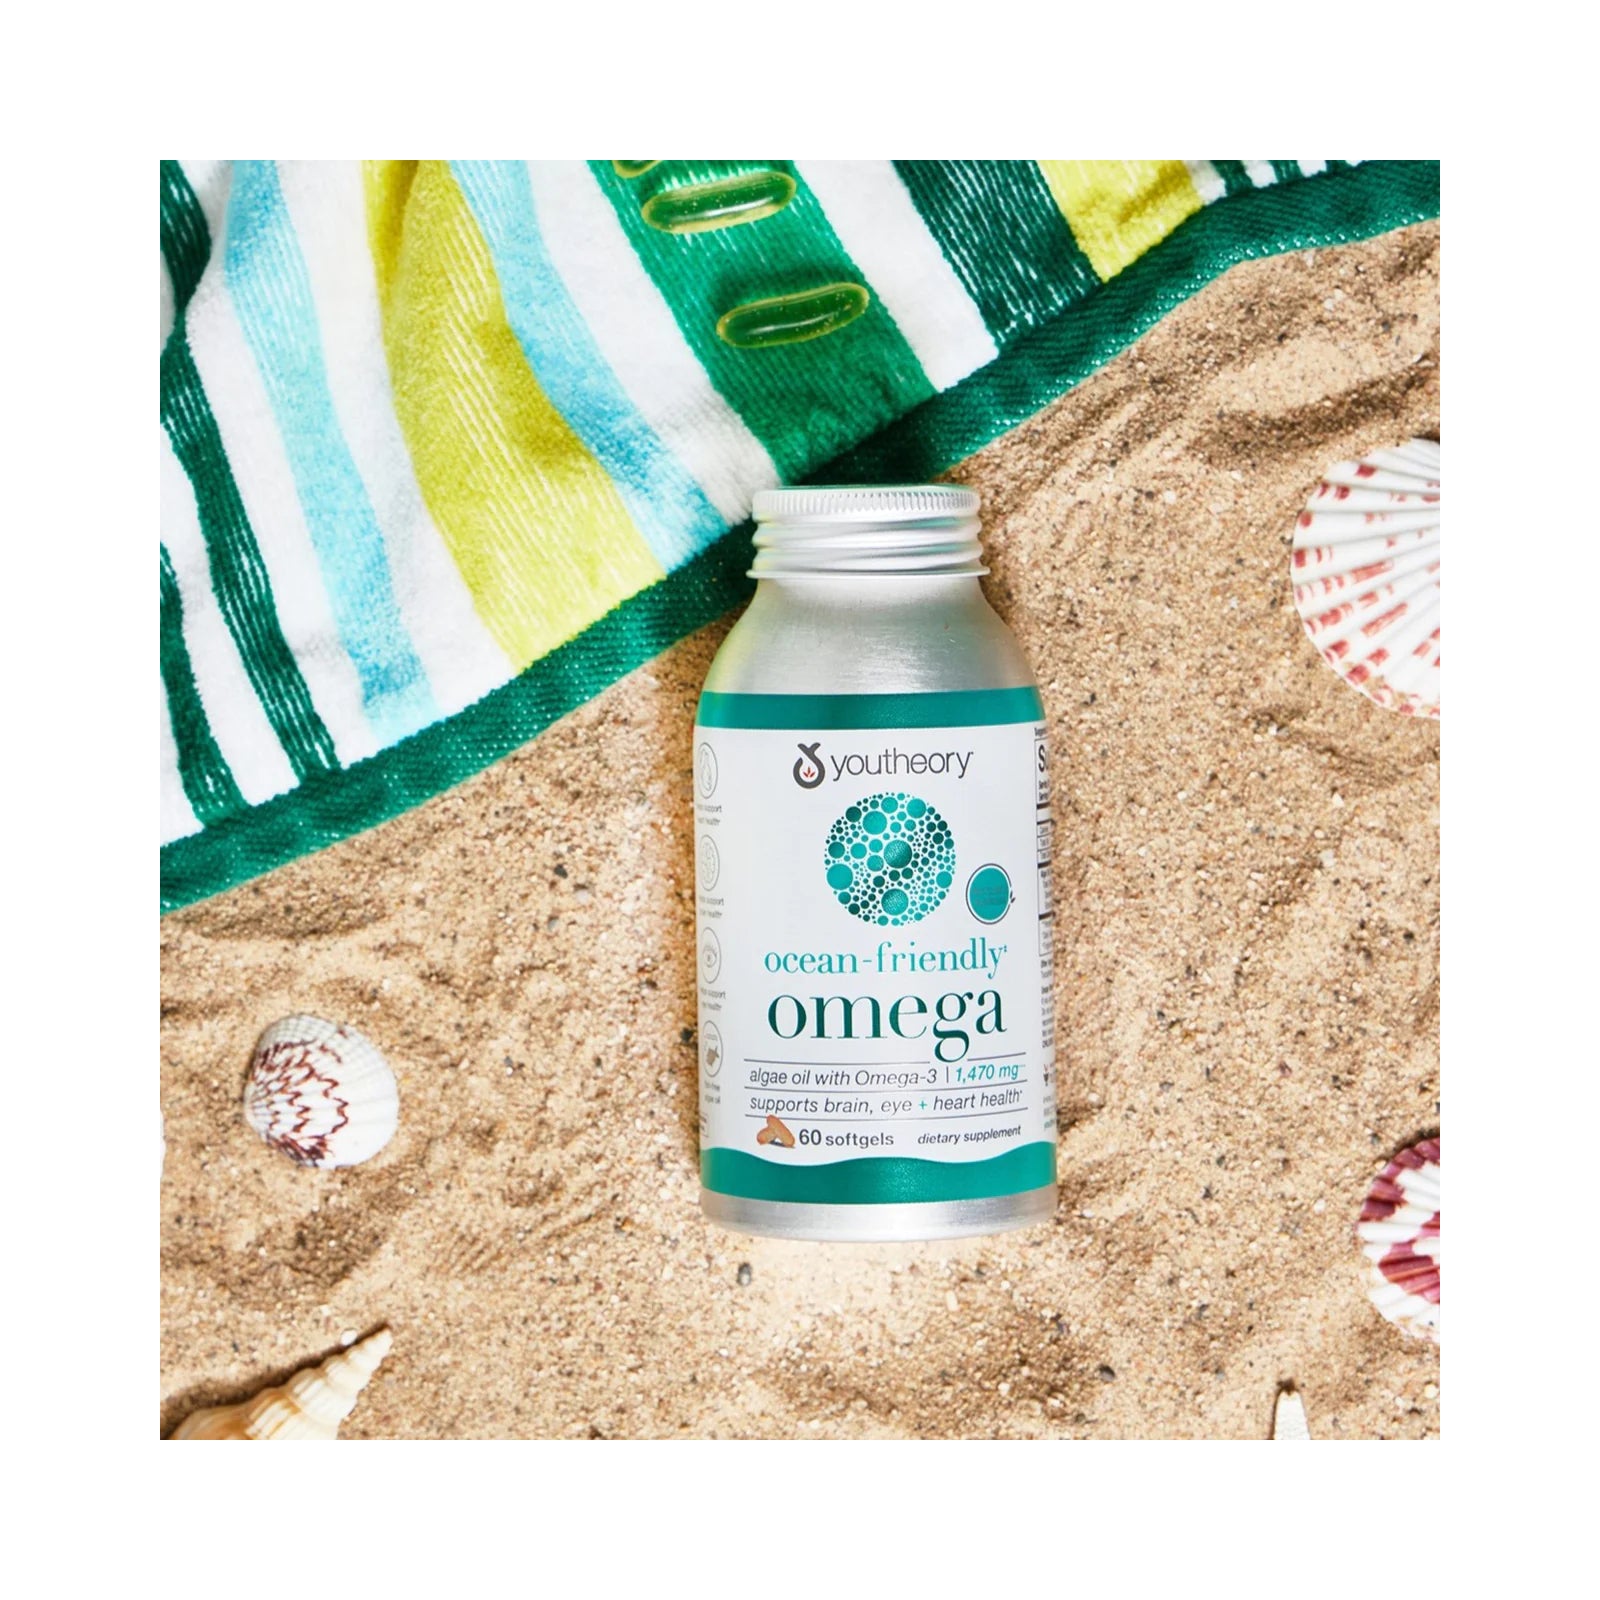 Youtheory Ocean-Friendly Omega 60 Capsules